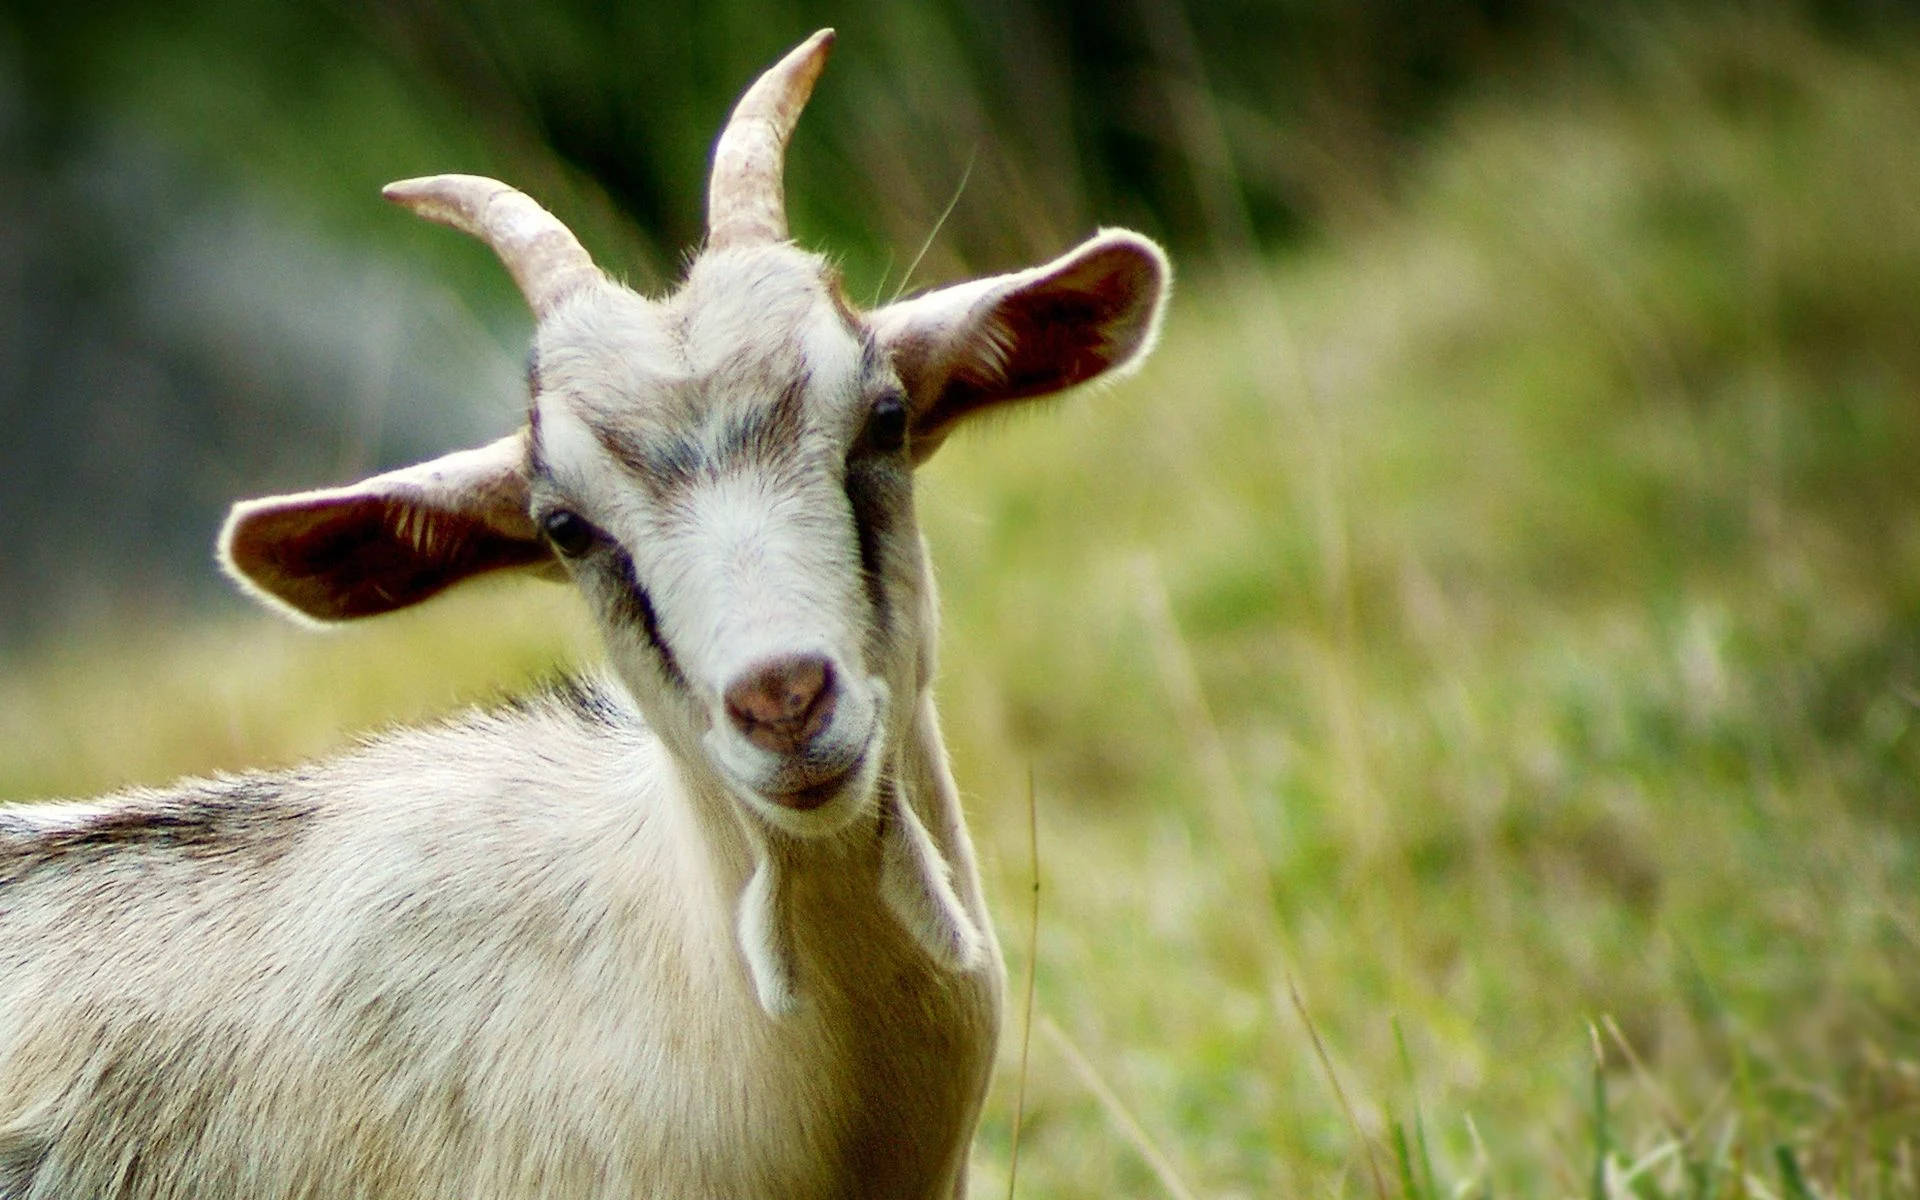 Stunning Goat With Distinctive Black Spot